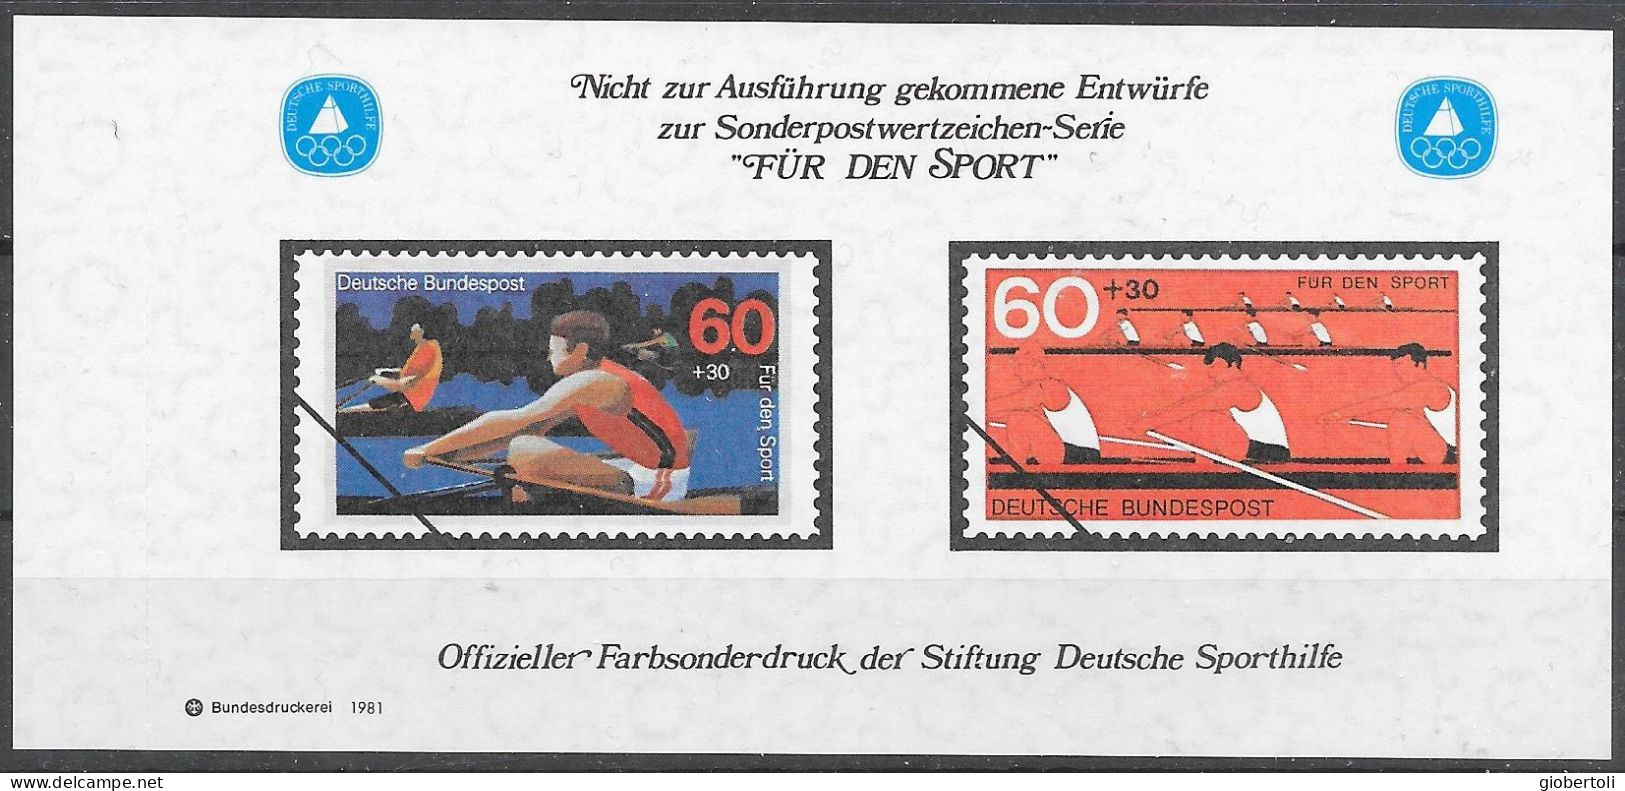 Germania/Germany/Allemagne: Bozzetti Non Adottati, Sketches Not Adopted, Croquis Non Adoptés, Per Lo Sport, For Sport, - Aviron